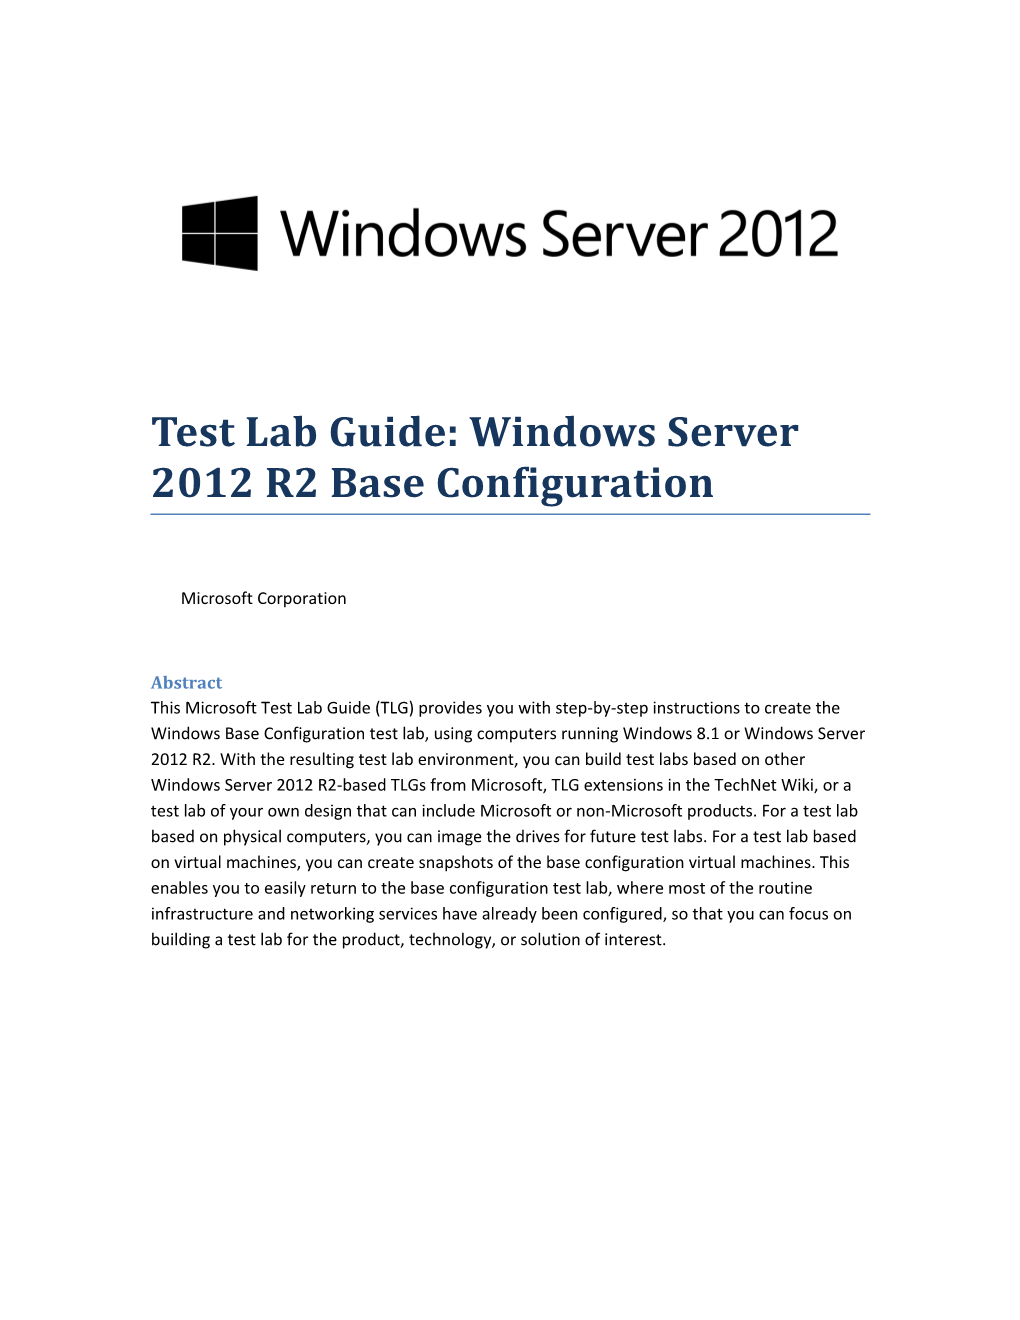 Test Lab Guide: Windows Server 2012 R2base Configuration